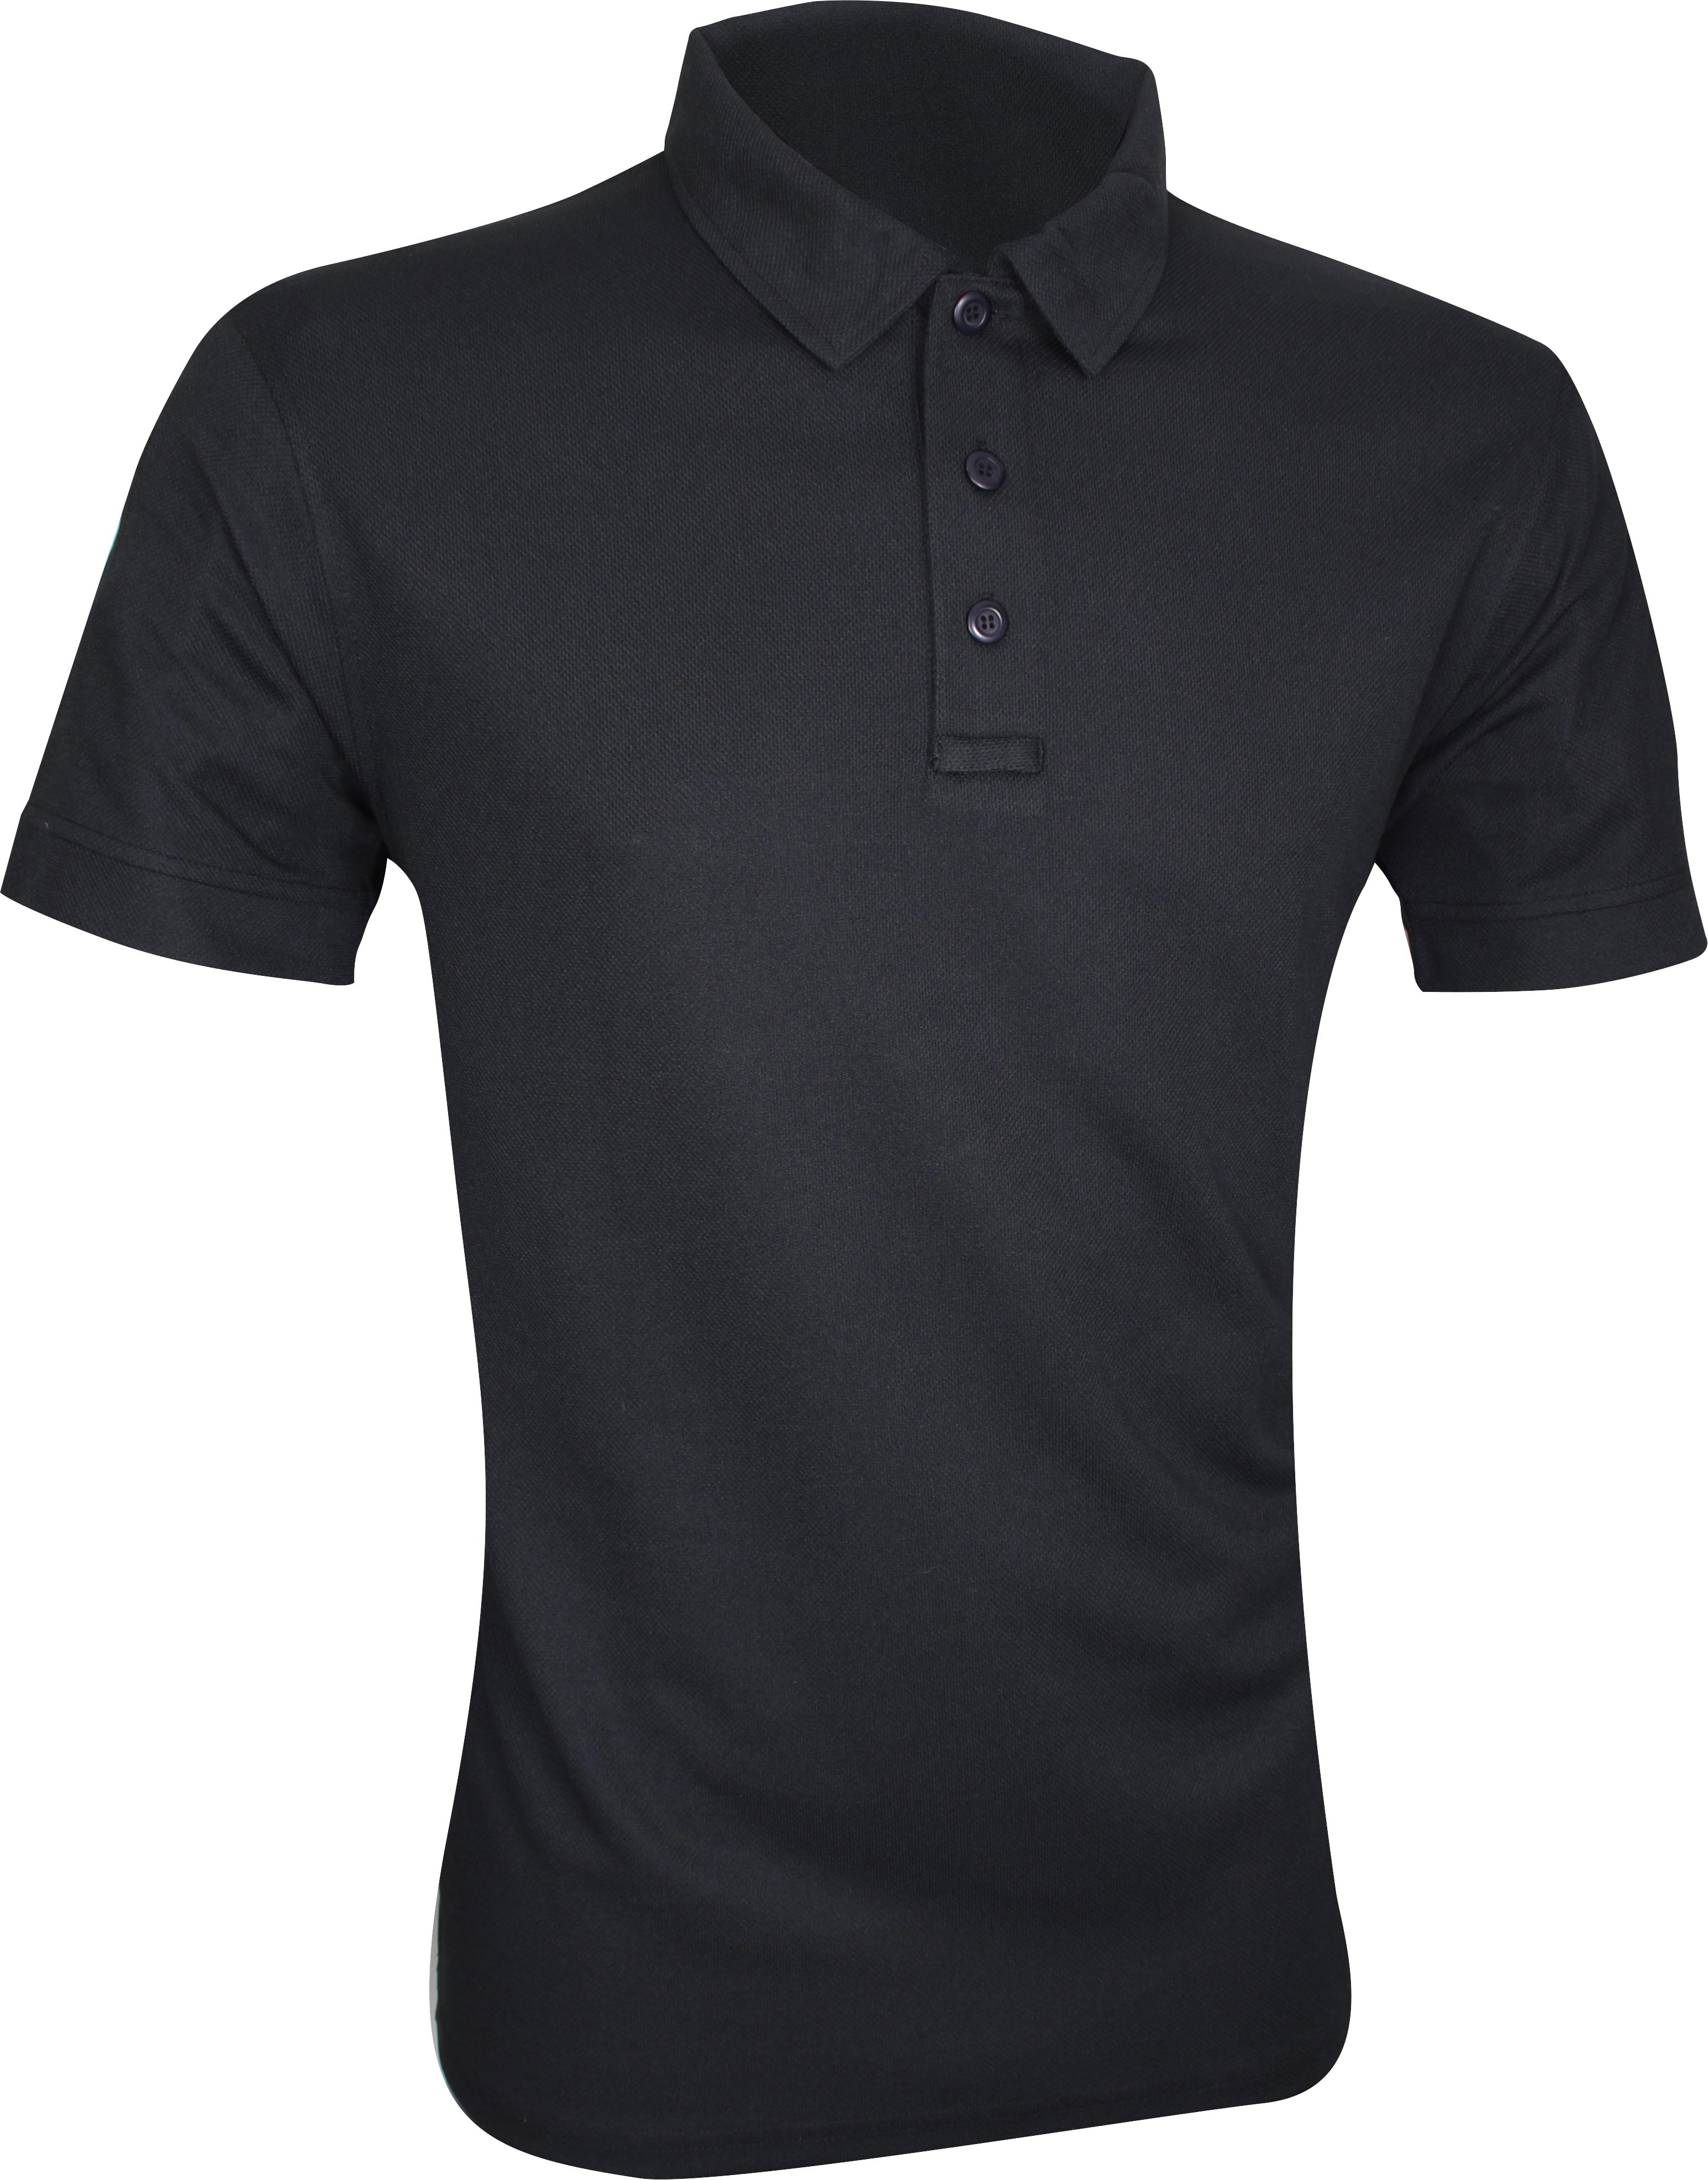 Viper Tactical Polo Shirt - Black